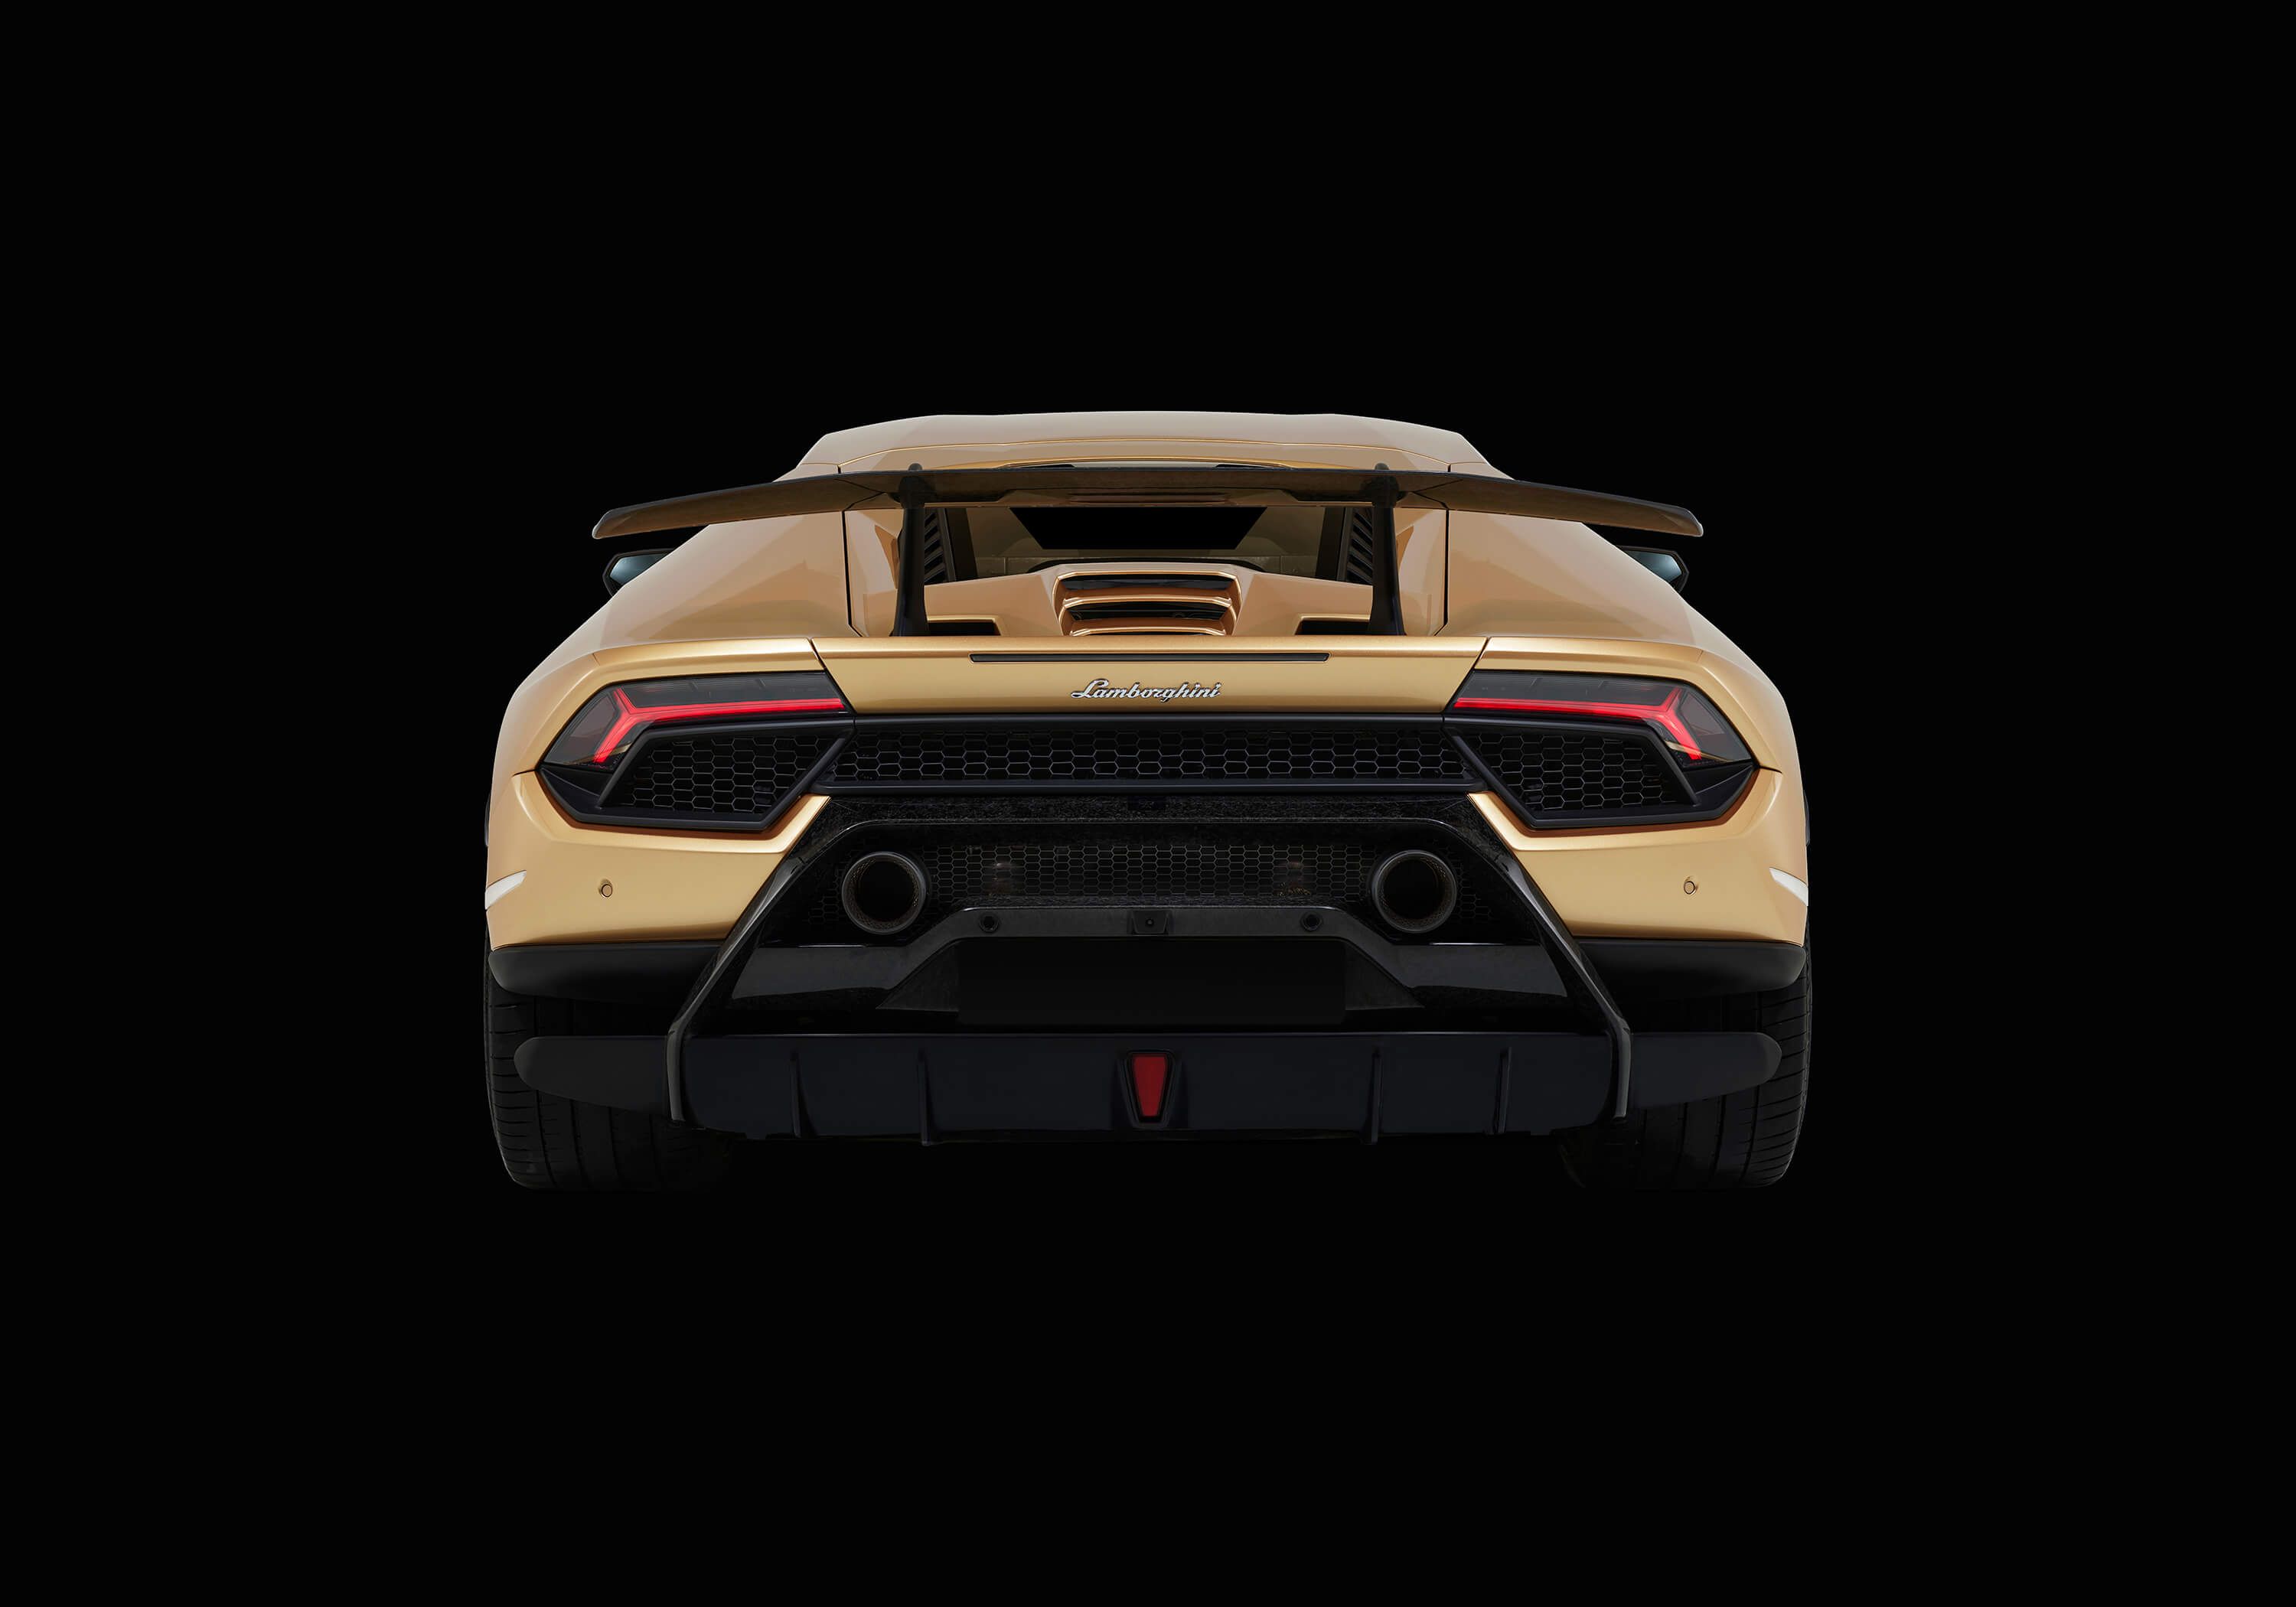 Wallpaper Lamborghini Huracán - Rear view, black